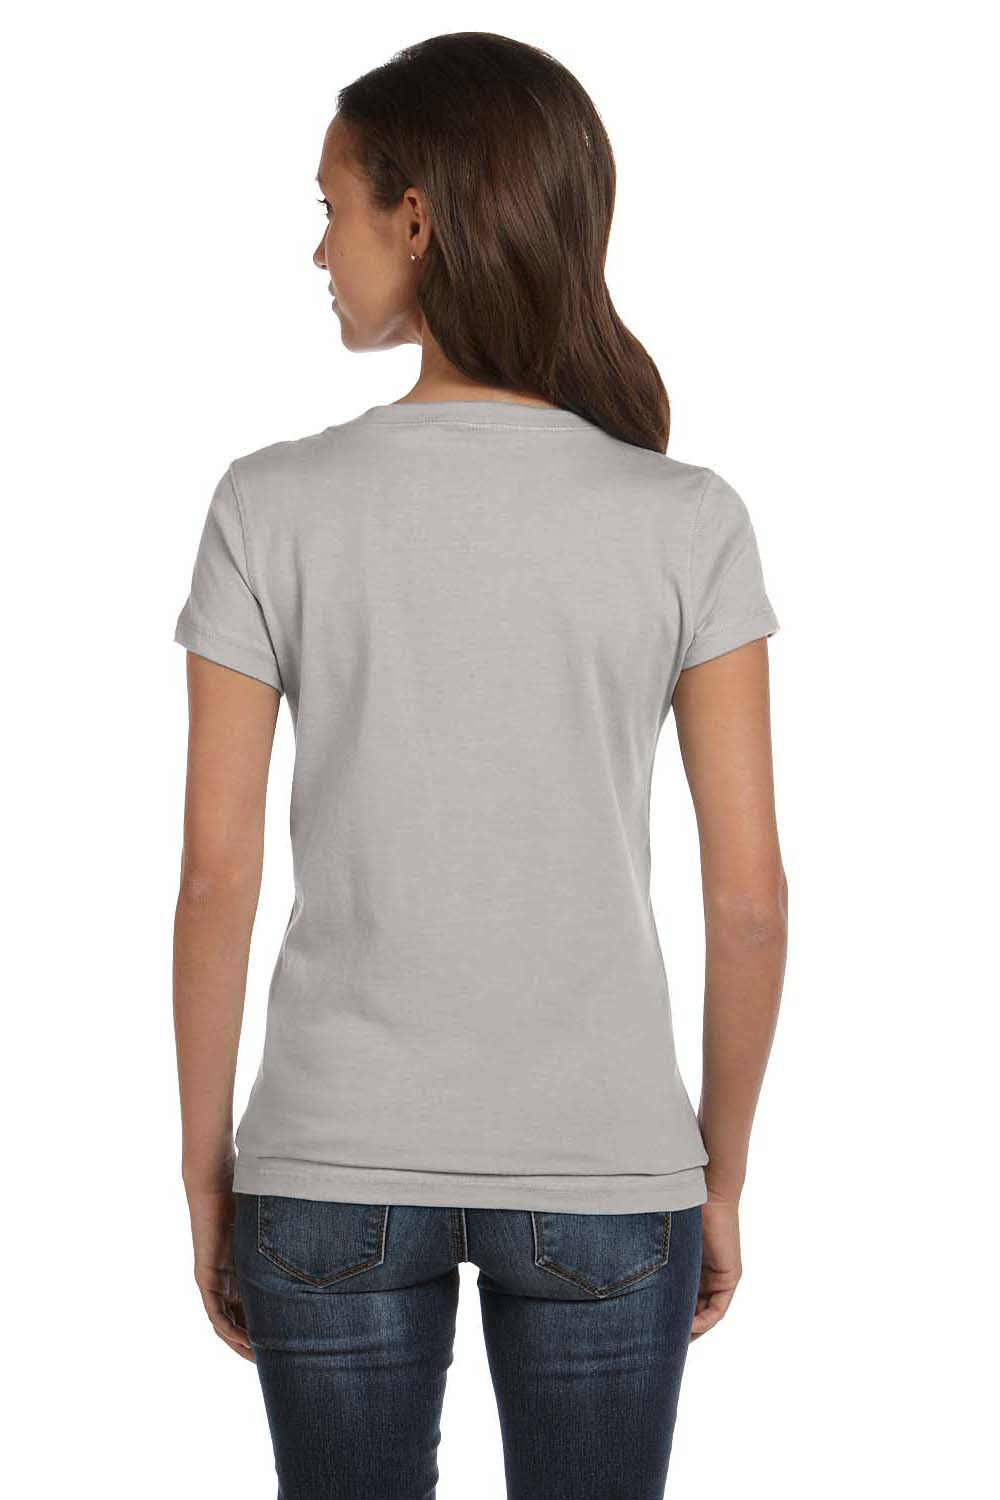 Bella + Canvas B6005/6005 Womens Jersey Short Sleeve V-Neck T-Shirt Heather Grey Model Back